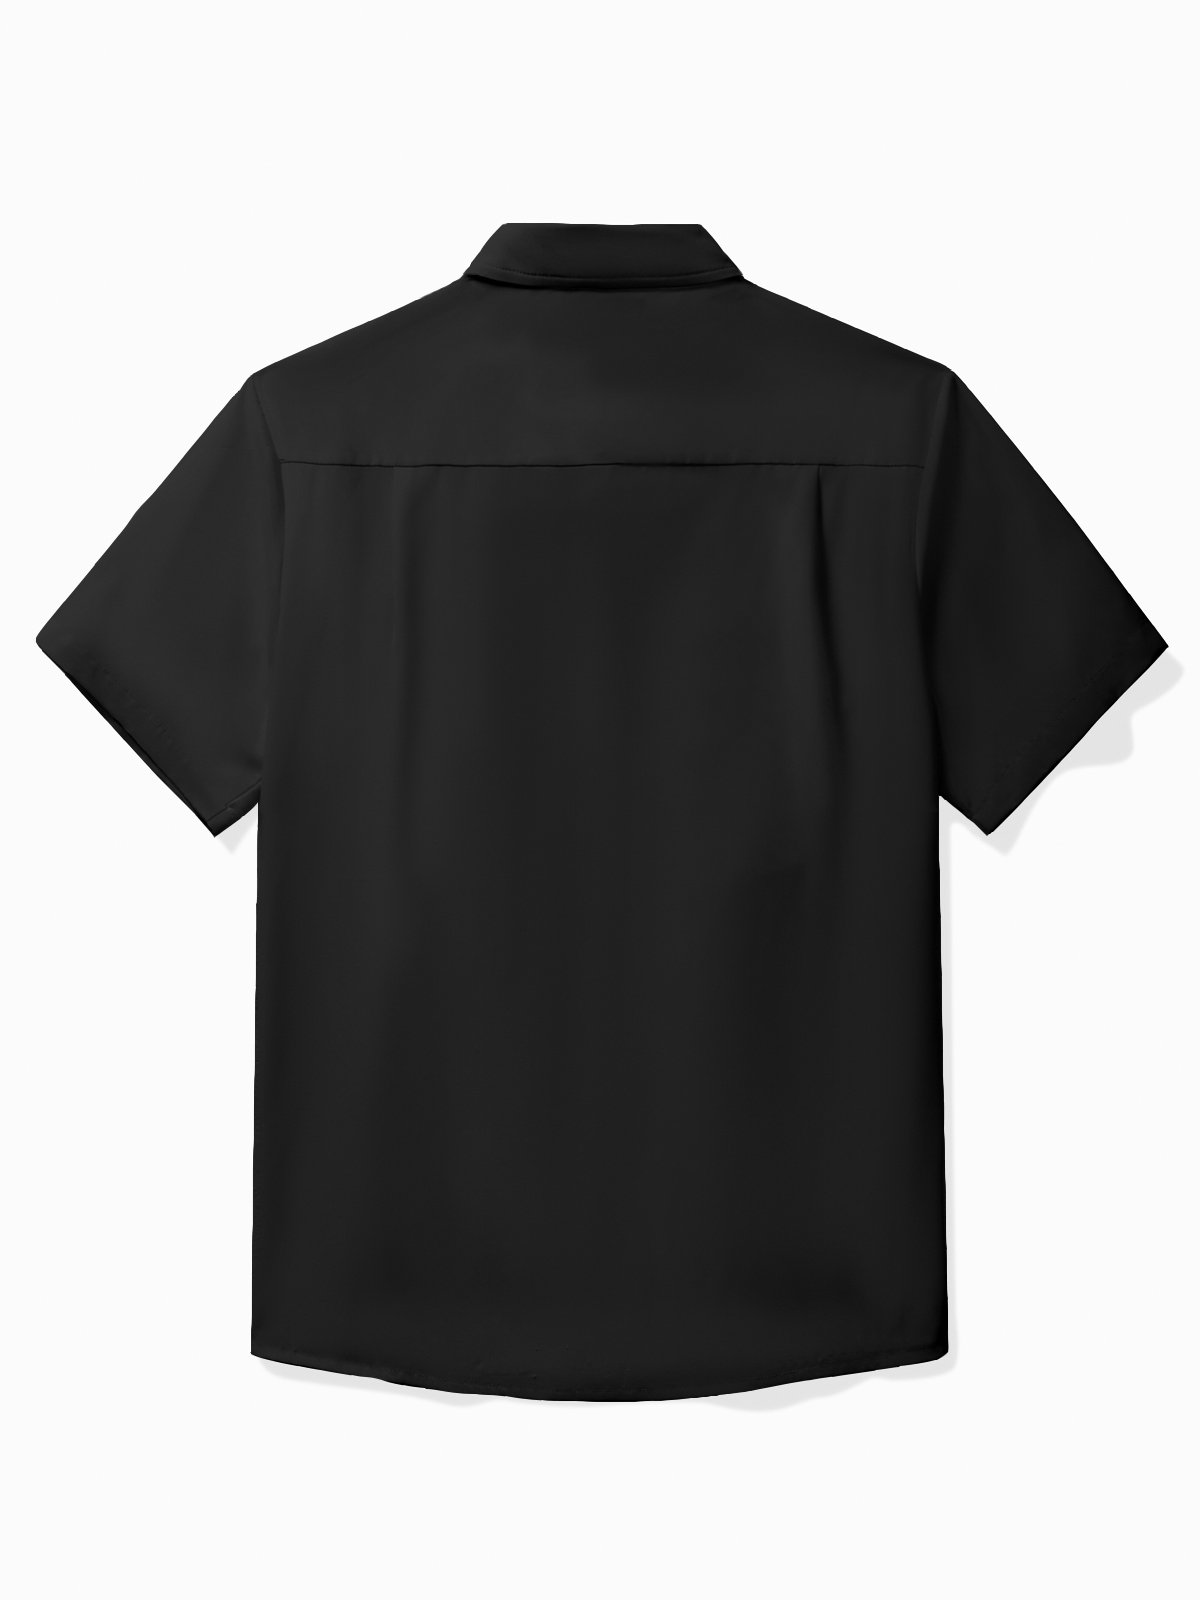 Royaura® Vintage Bowling Pinstripe Tiki Print Chest Pocket Shirt Plus Size Men's Shirt